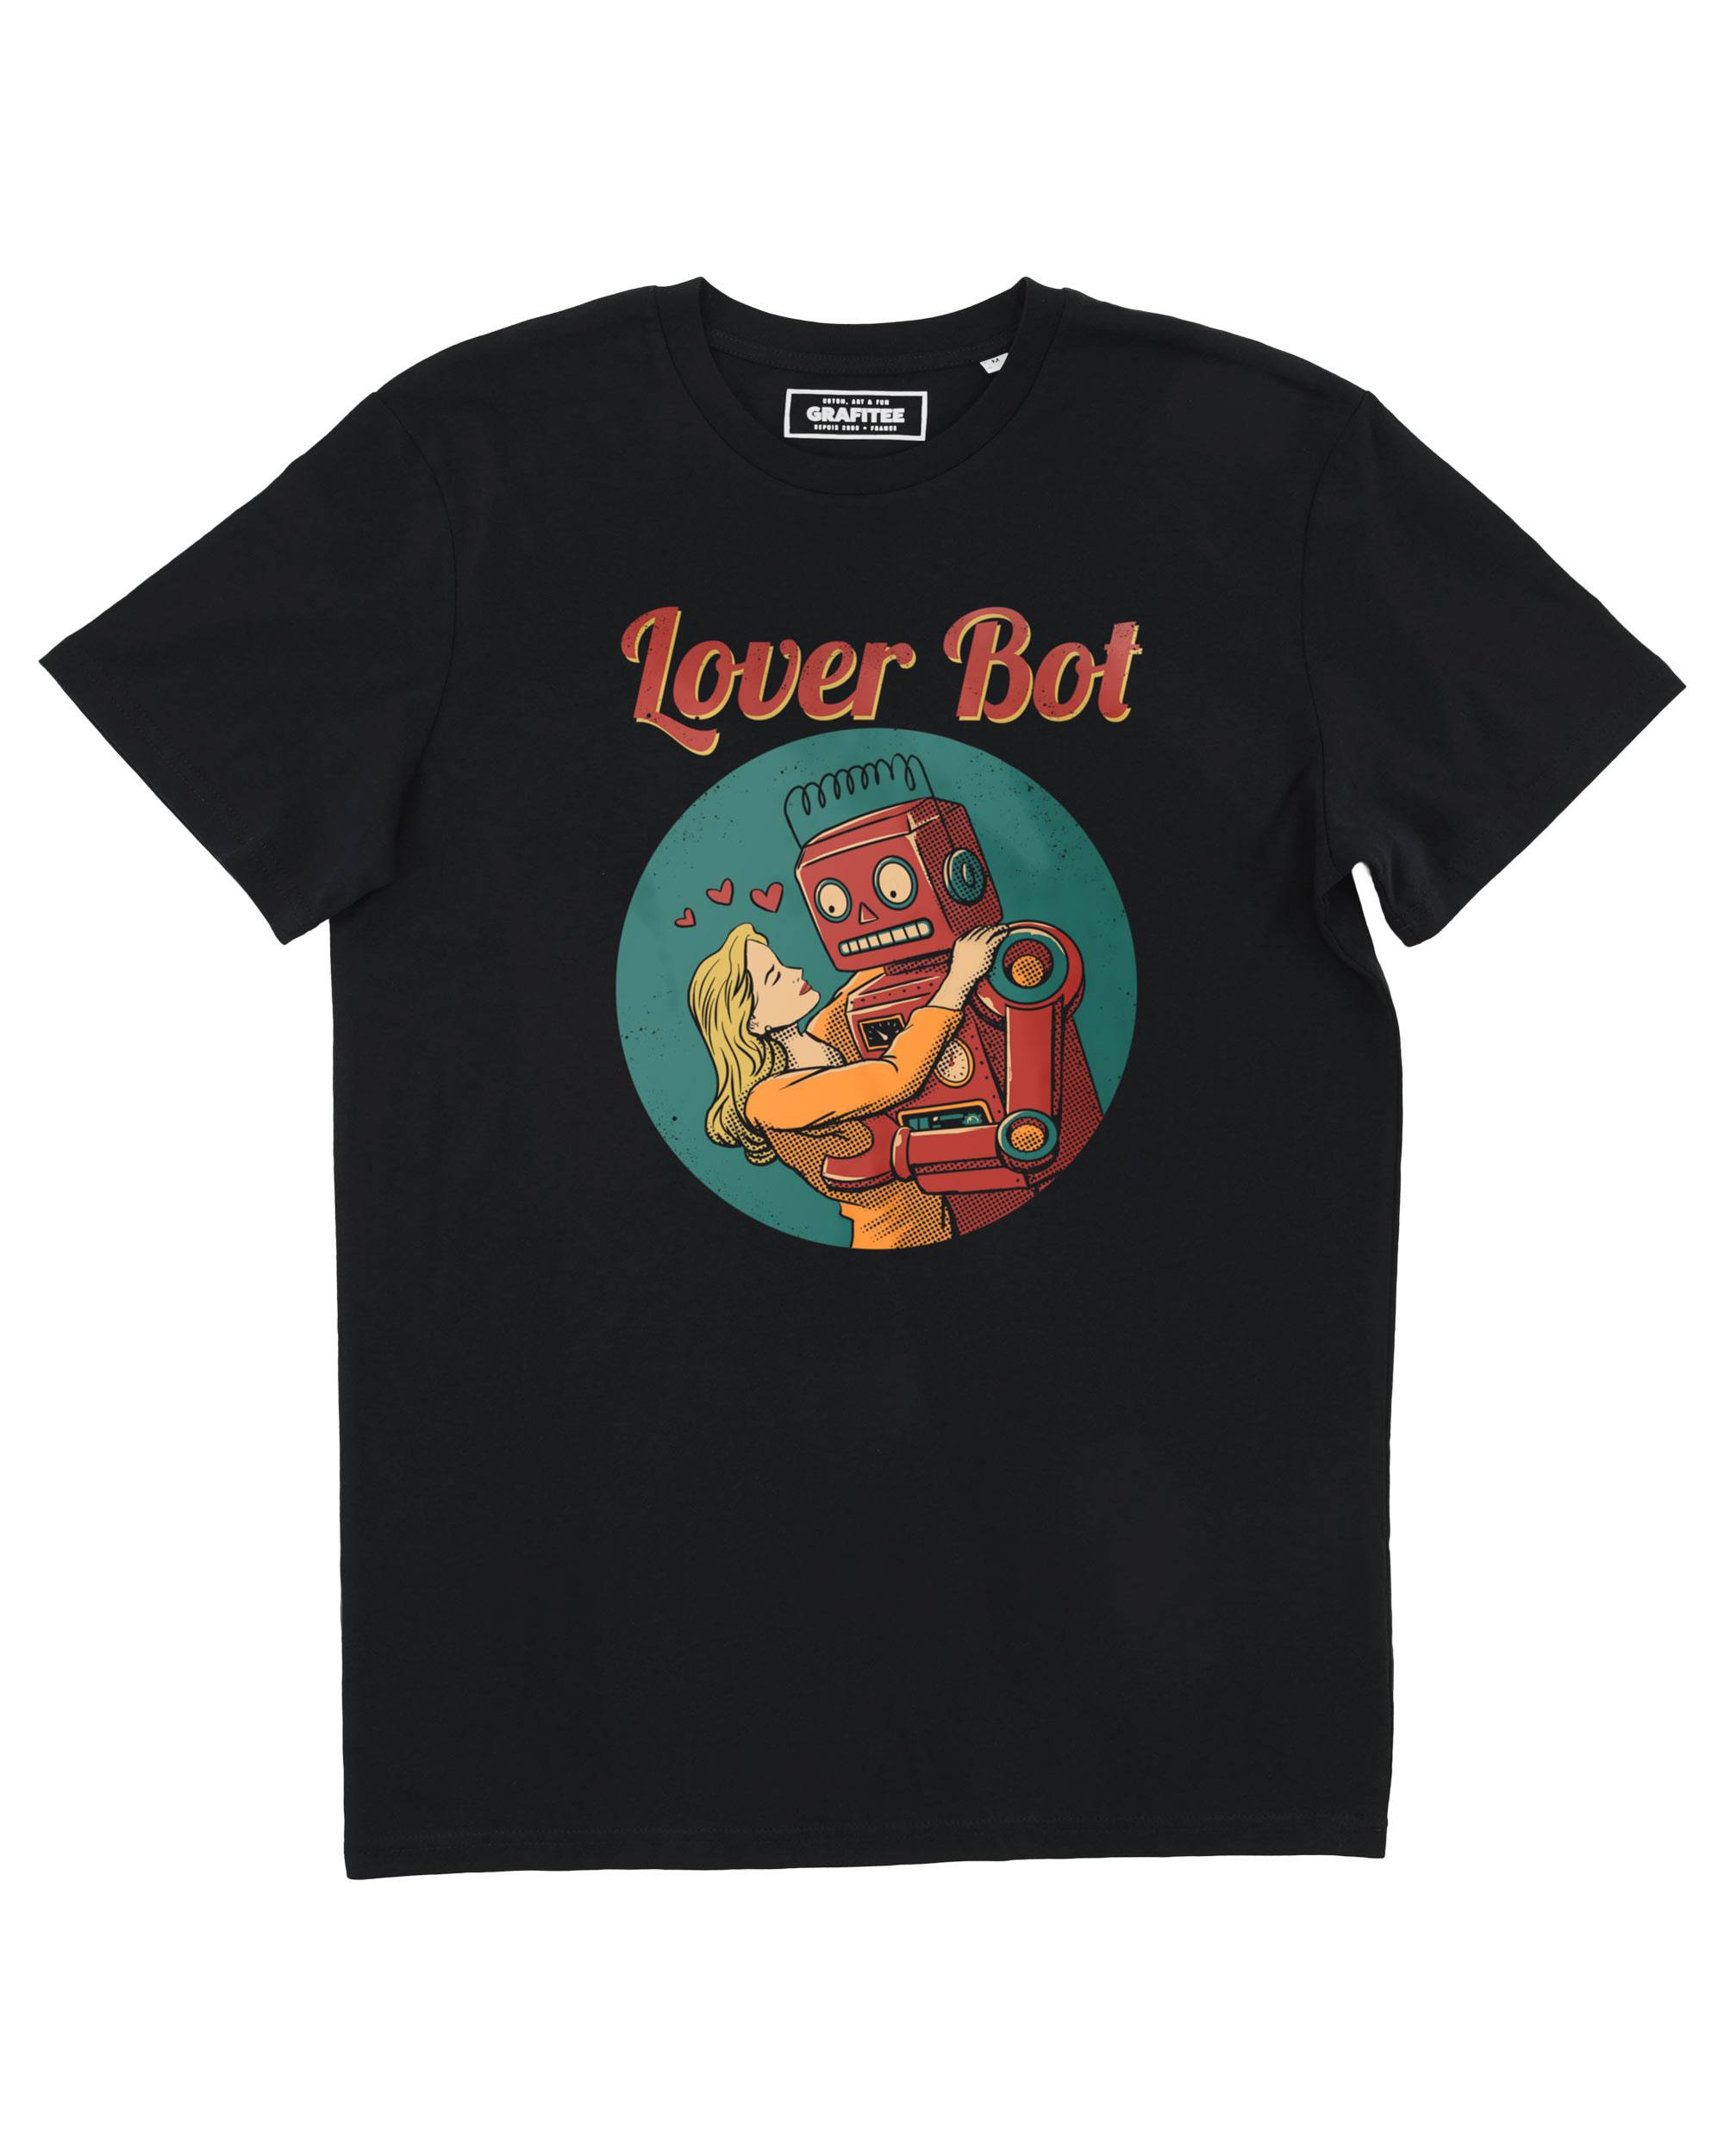 T-shirt Lover Bot Grafitee